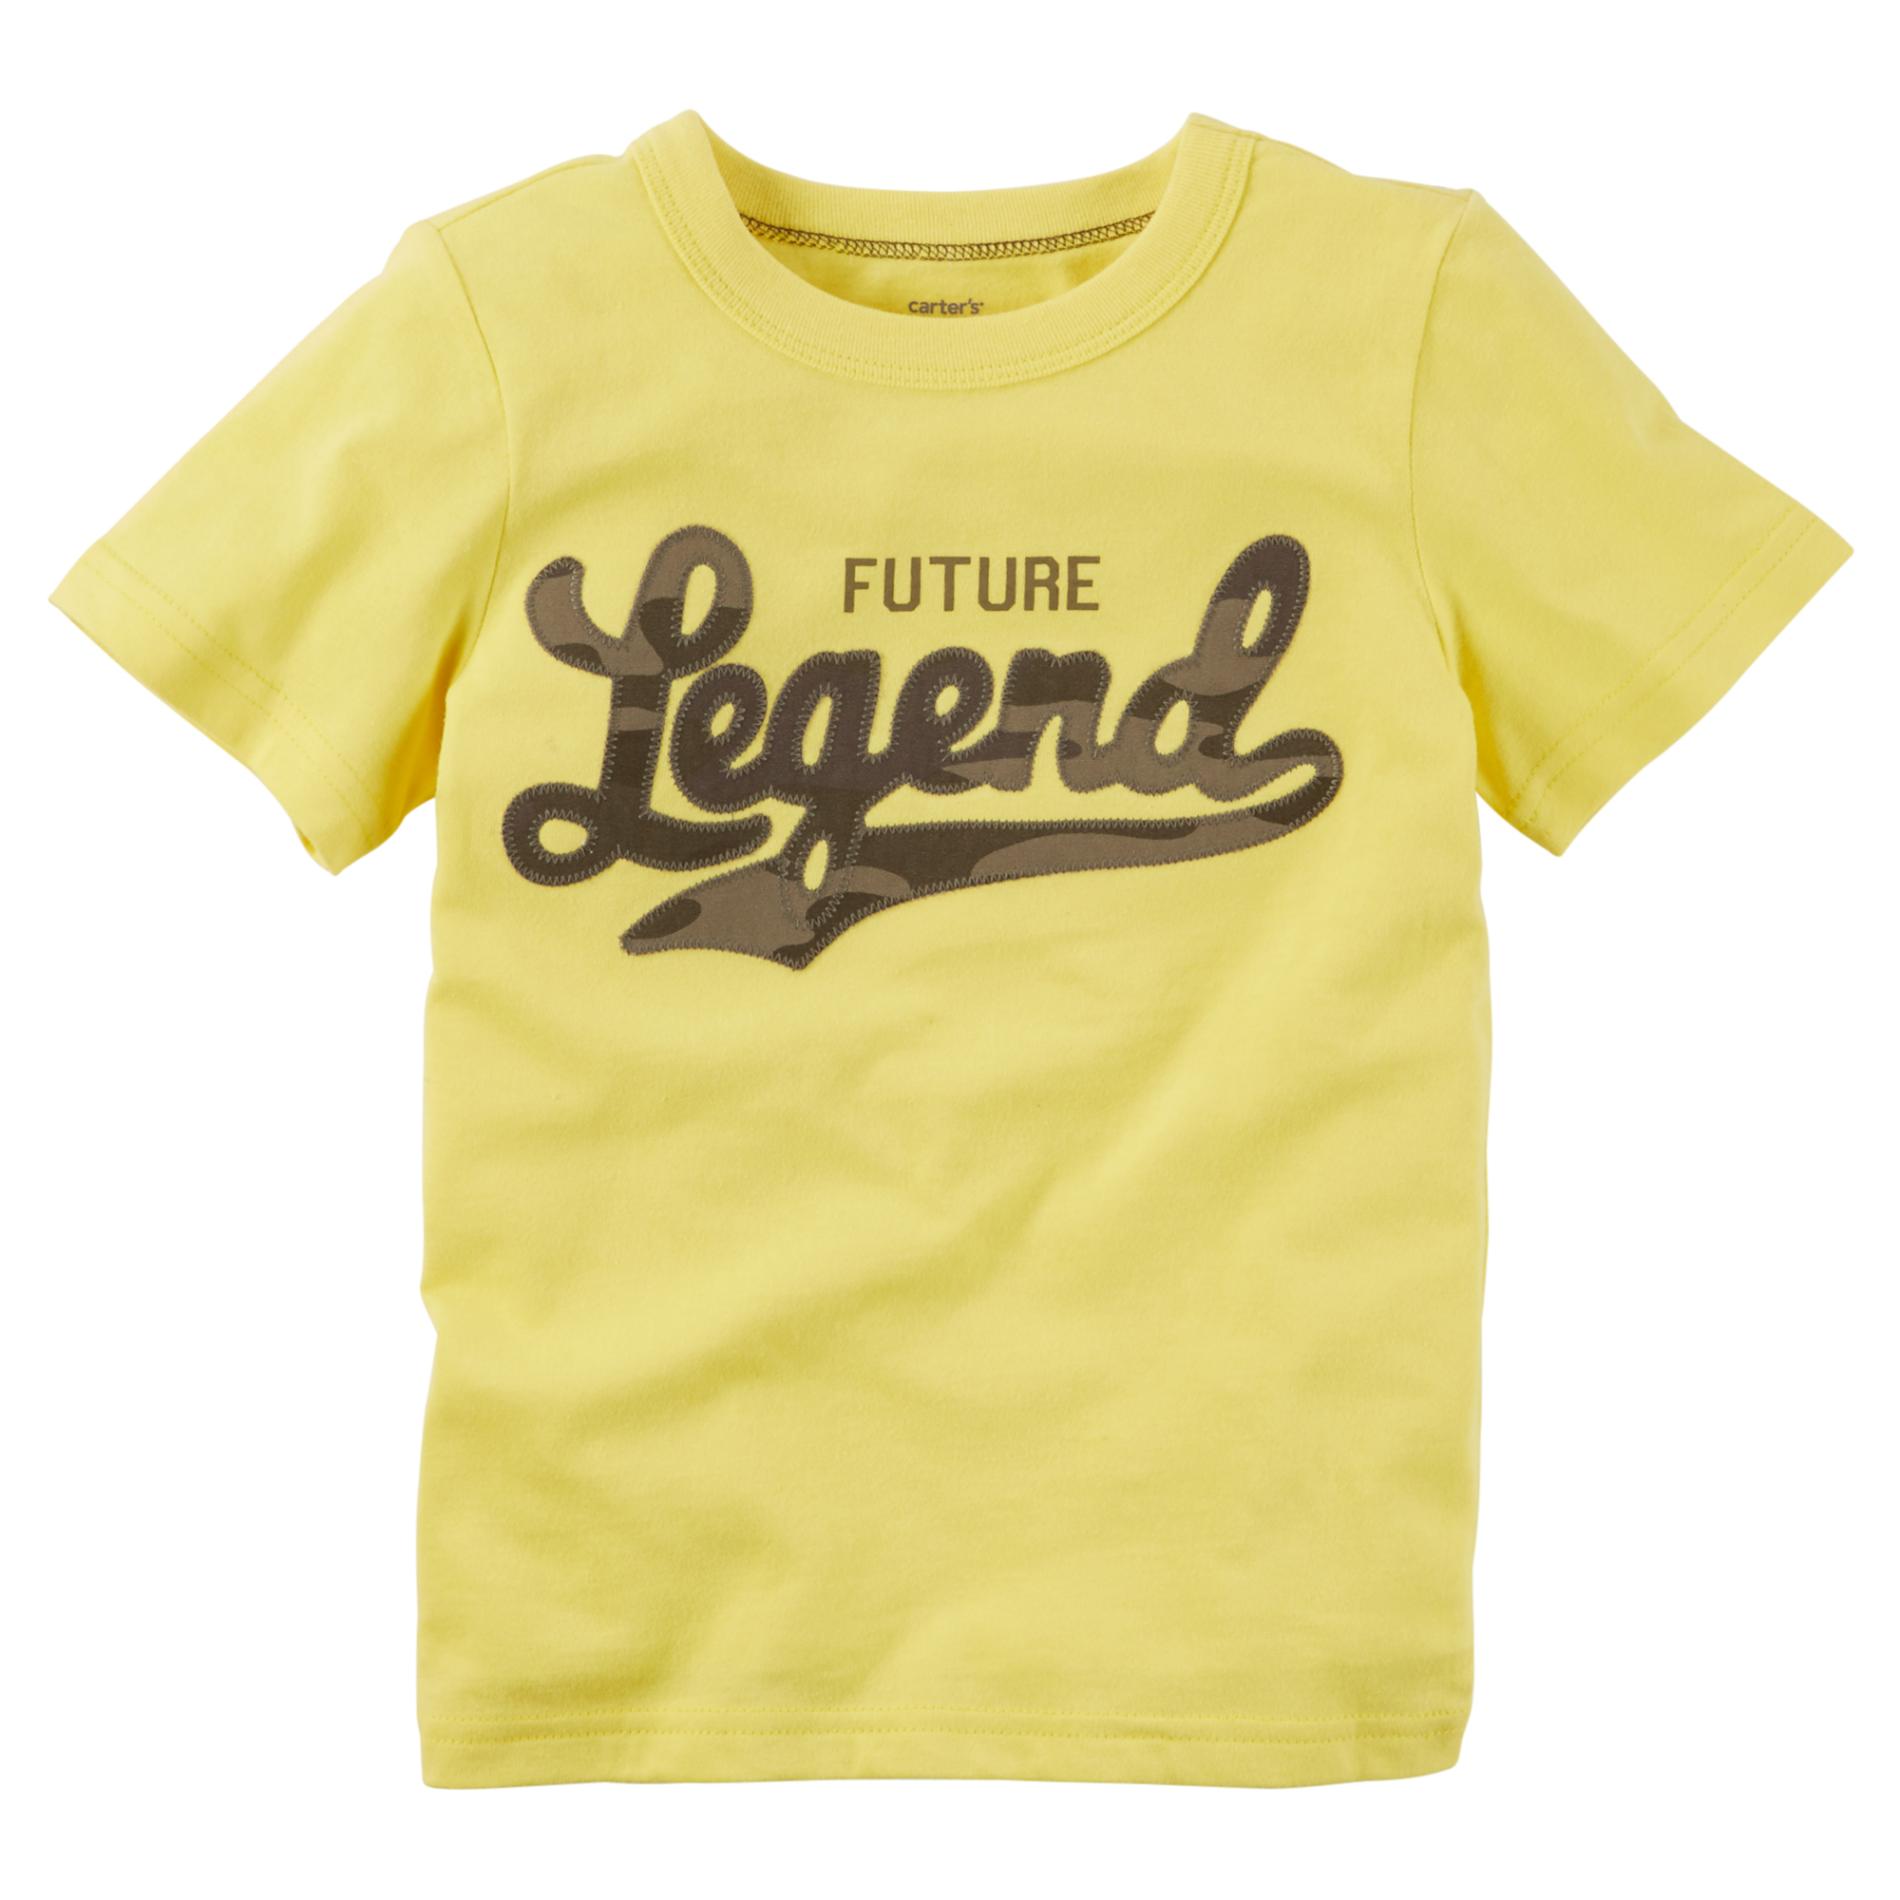 Carter's Toddler Boy's Graphic T-Shirt - Future Legend